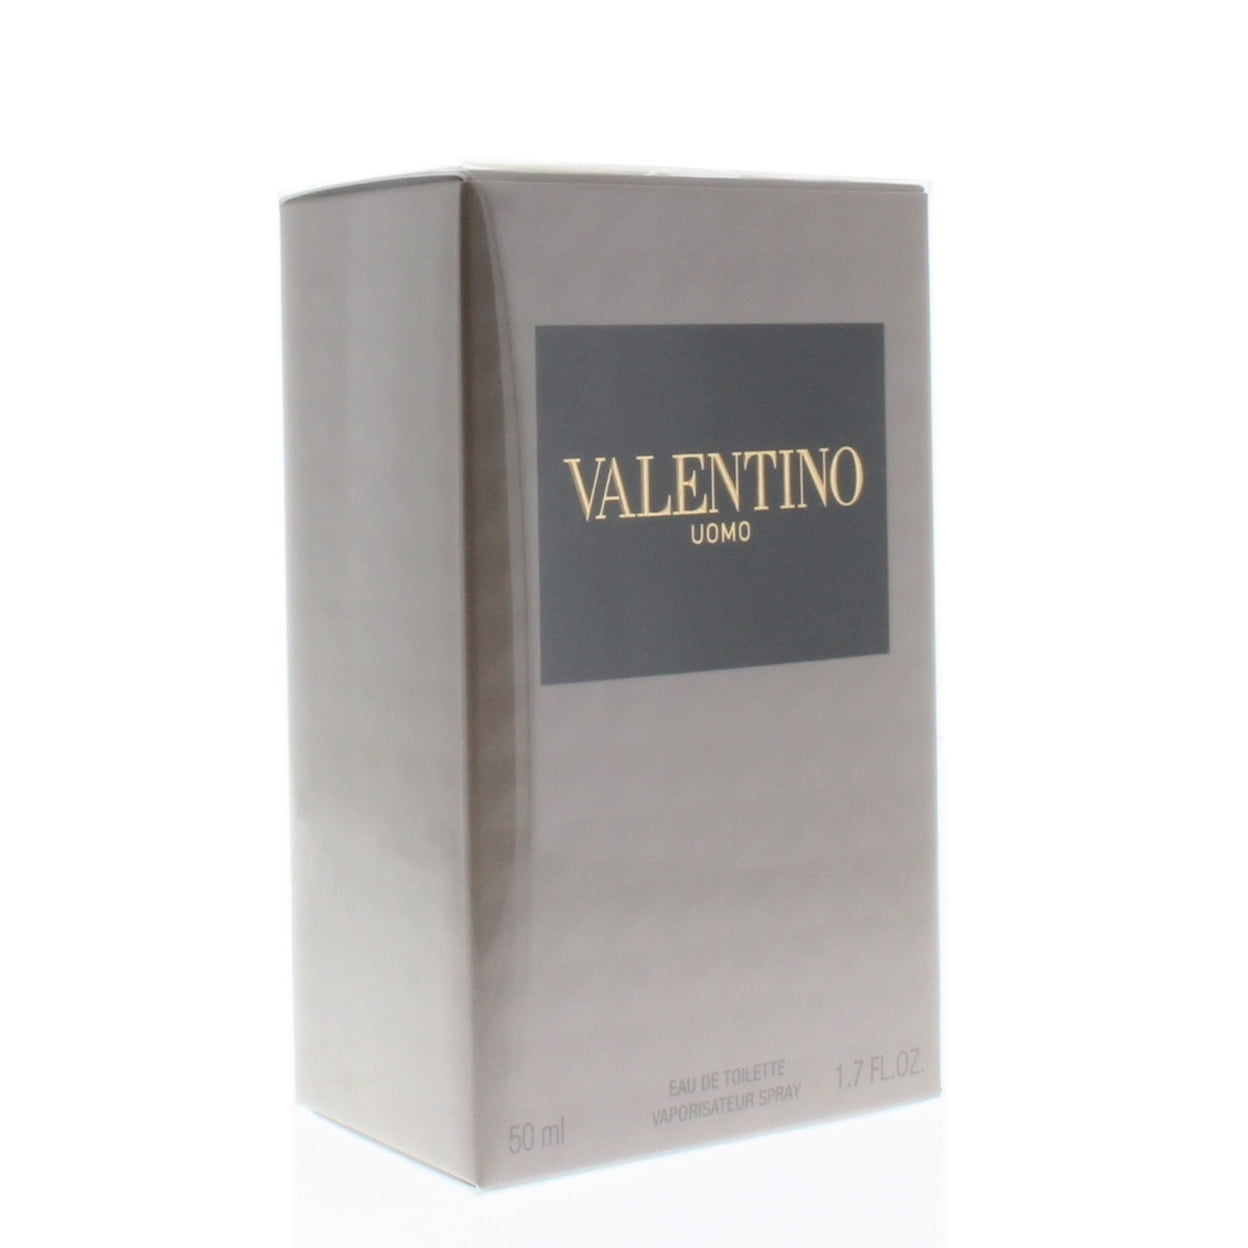 Valentino Uomo Eau De Toilette for Men 1.7oz/50ml - Walmart.com